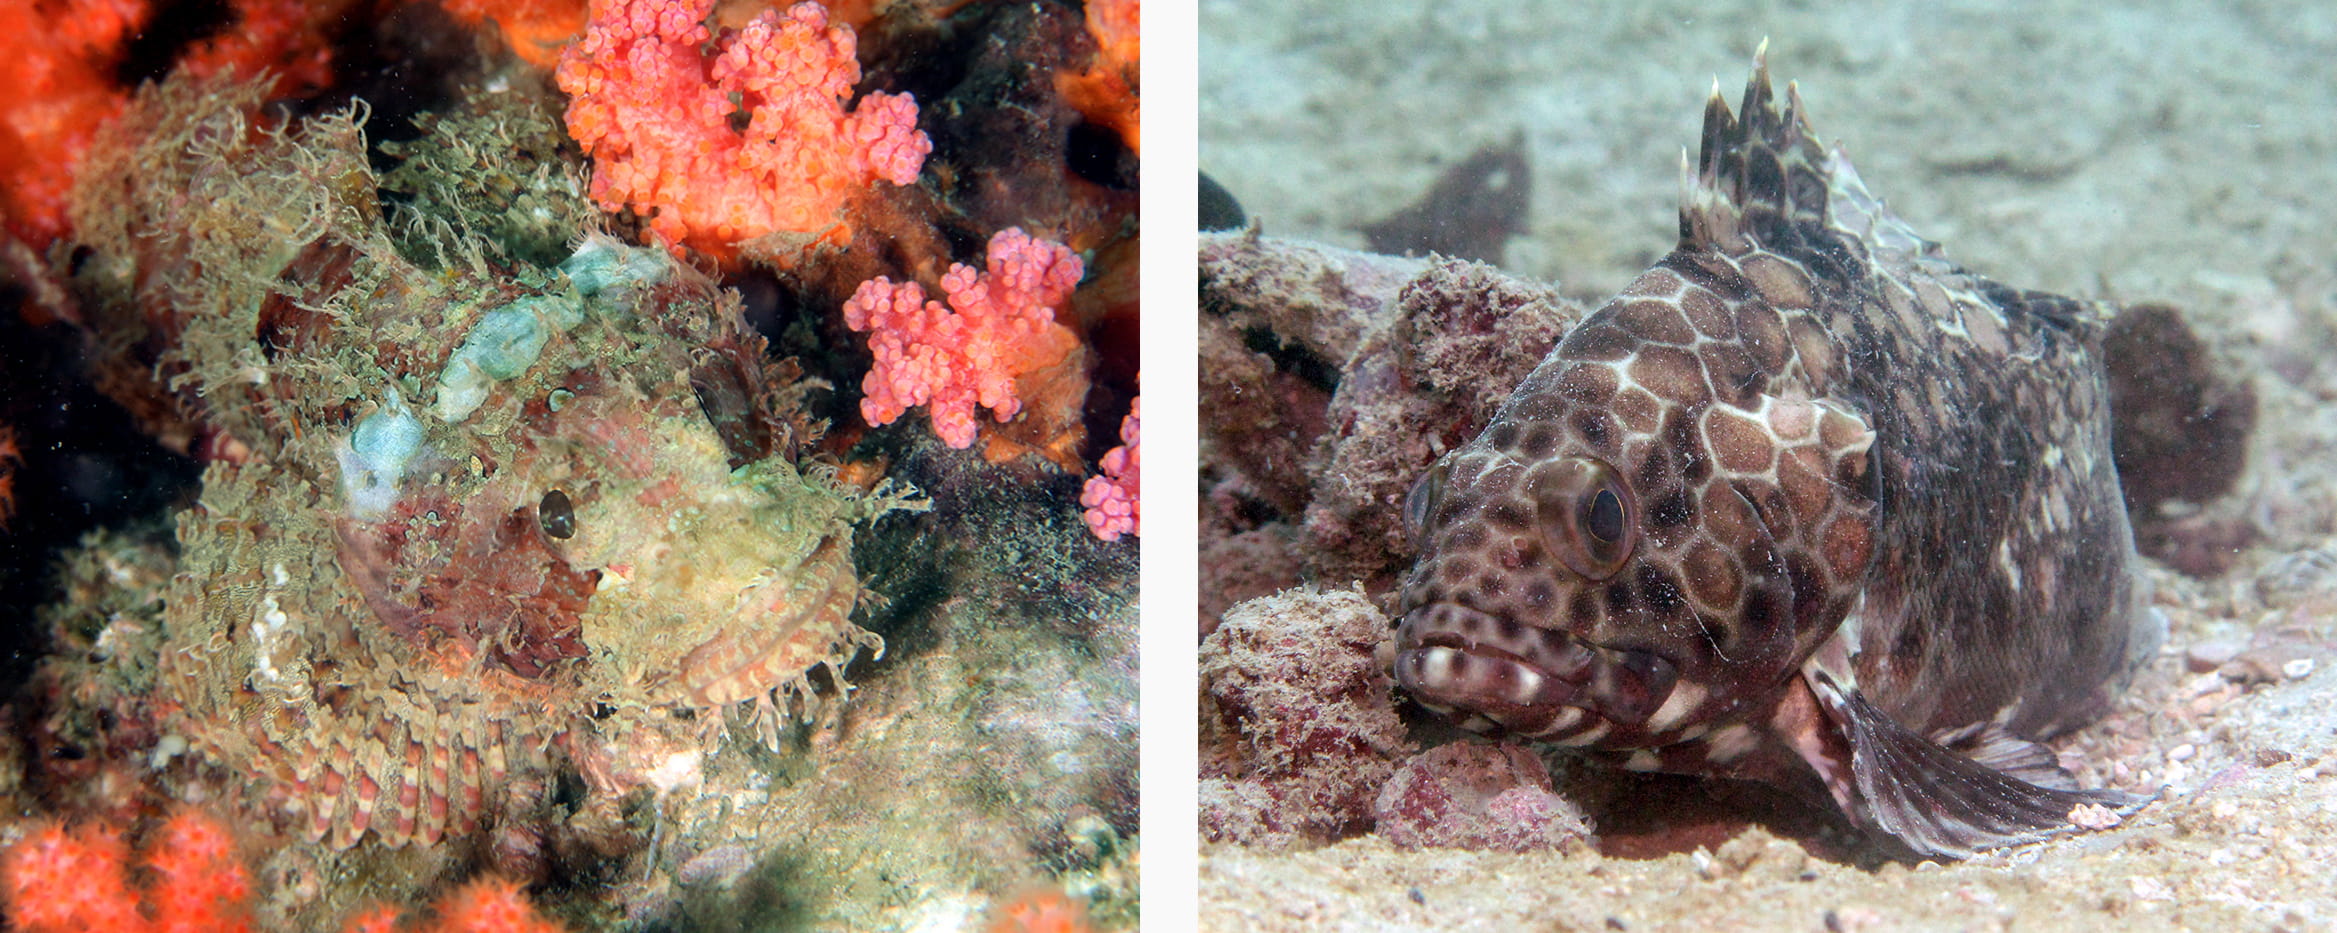 Left: False kelpfish. Right: Longfin grouper